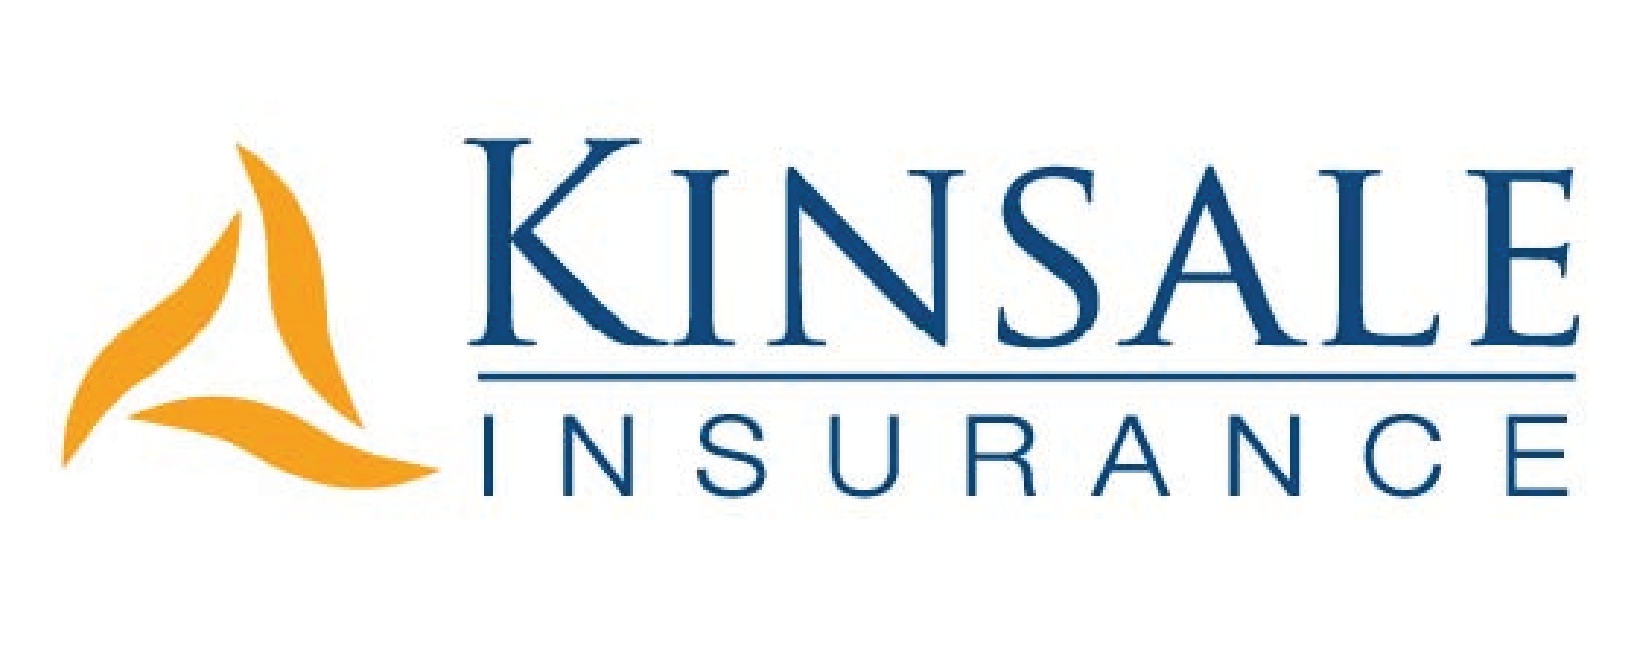 Kinsale logo